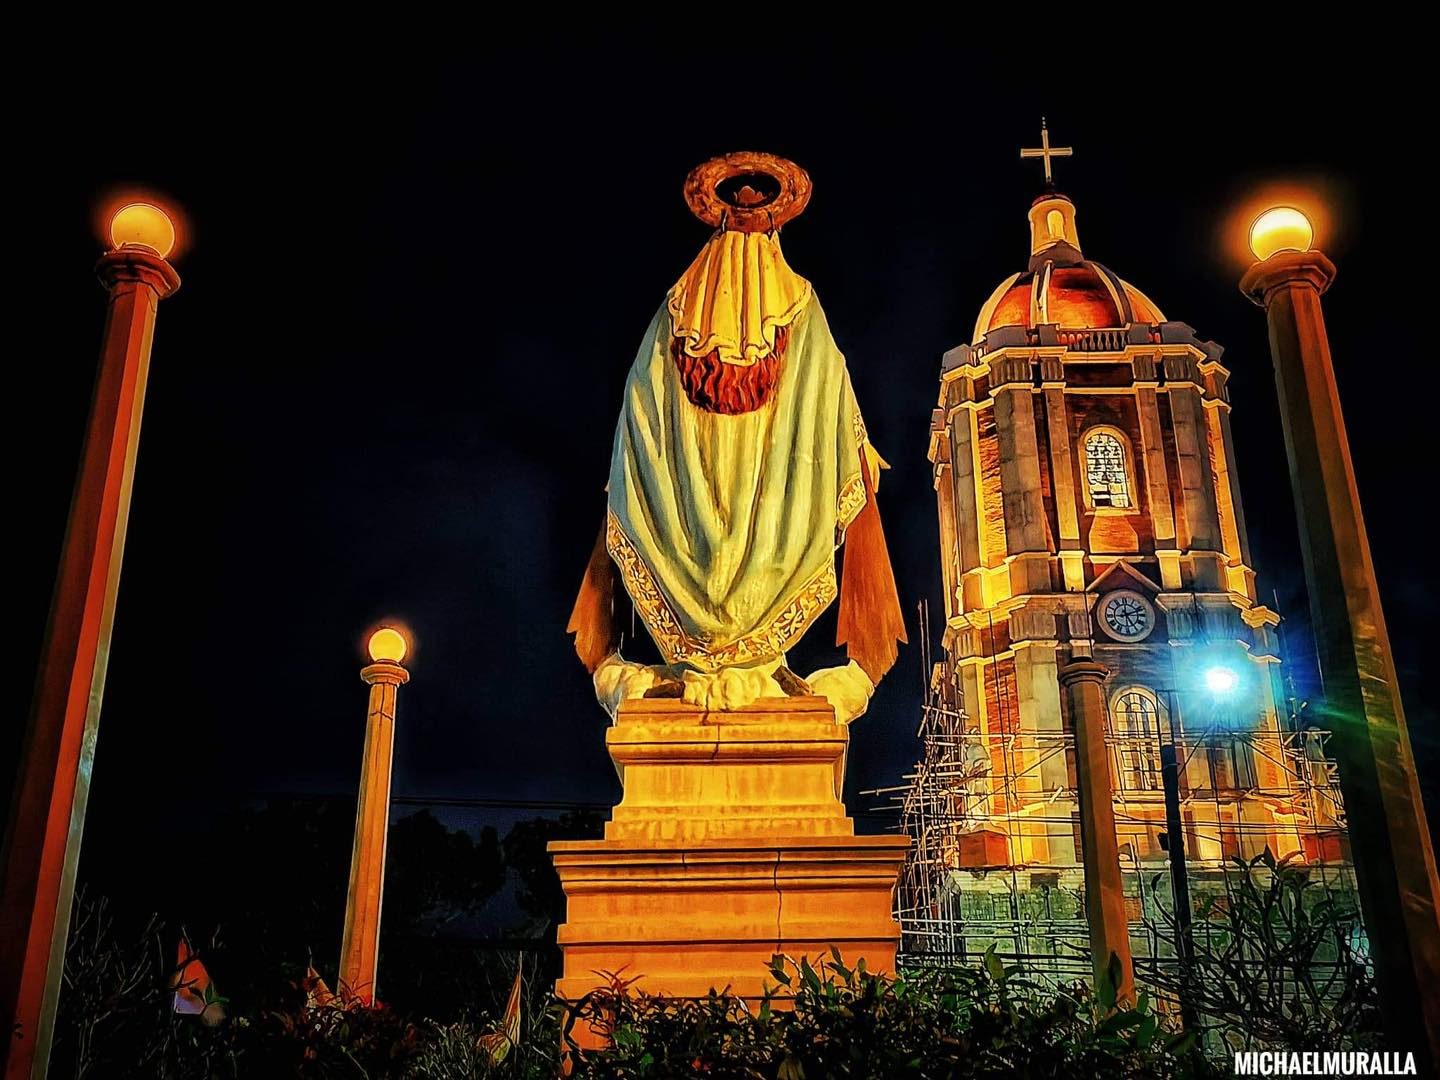 Iloilo City churches, parks all lit up following rehabilitation